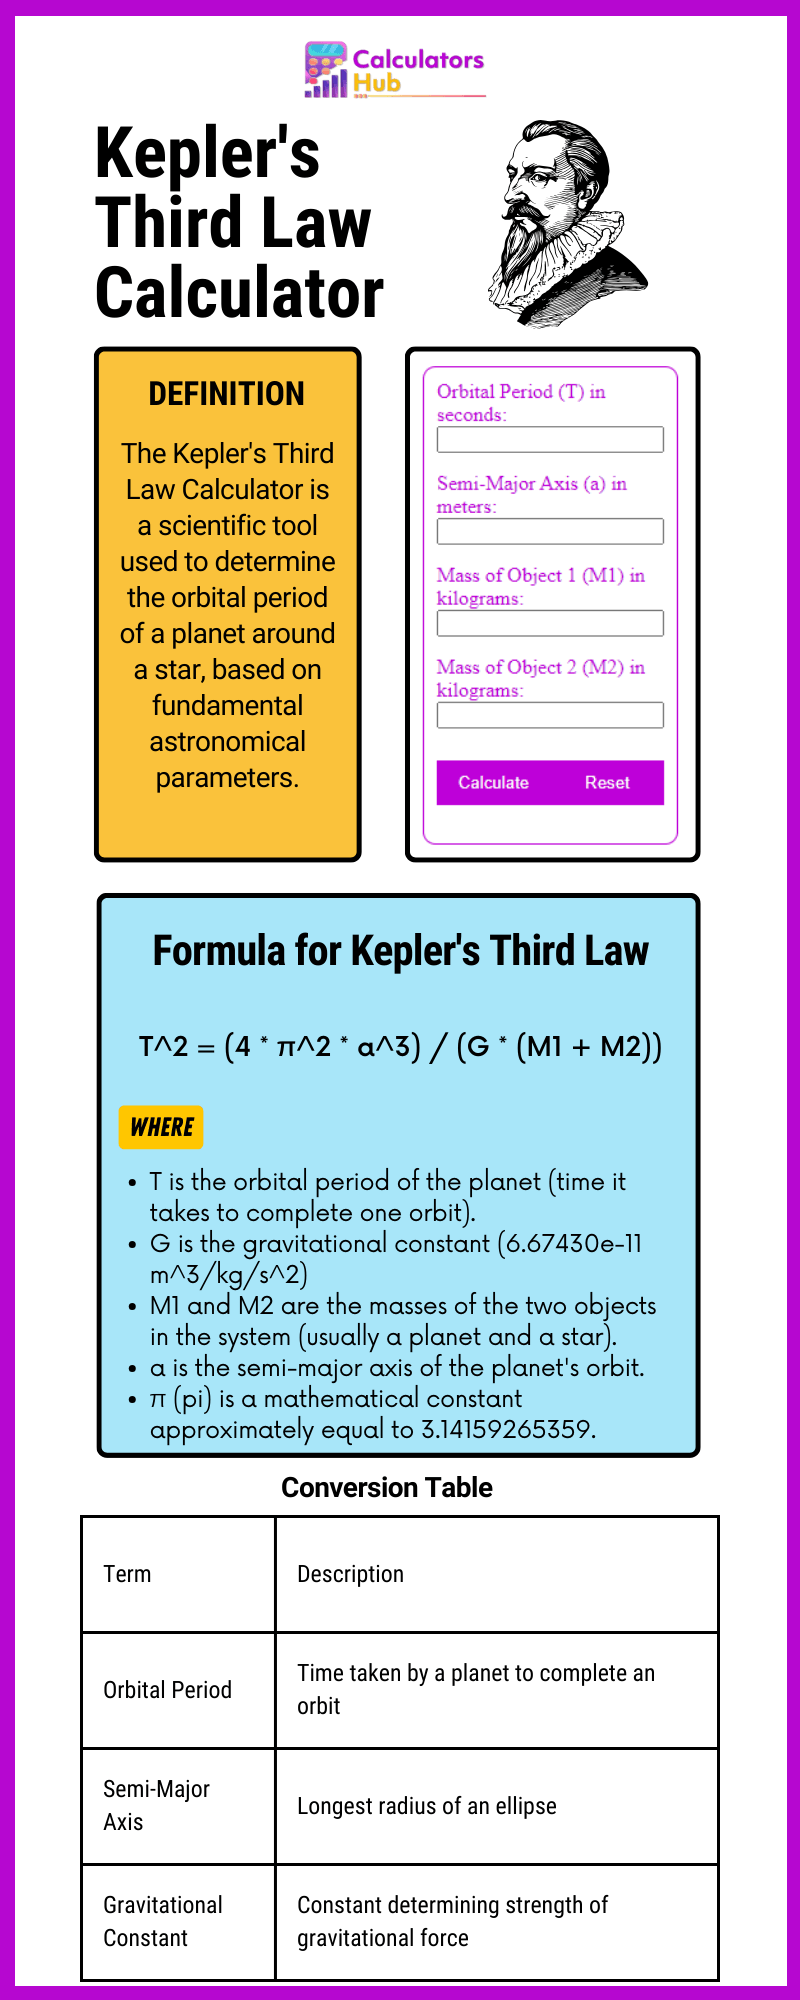 Kepler's Third Law Calculator